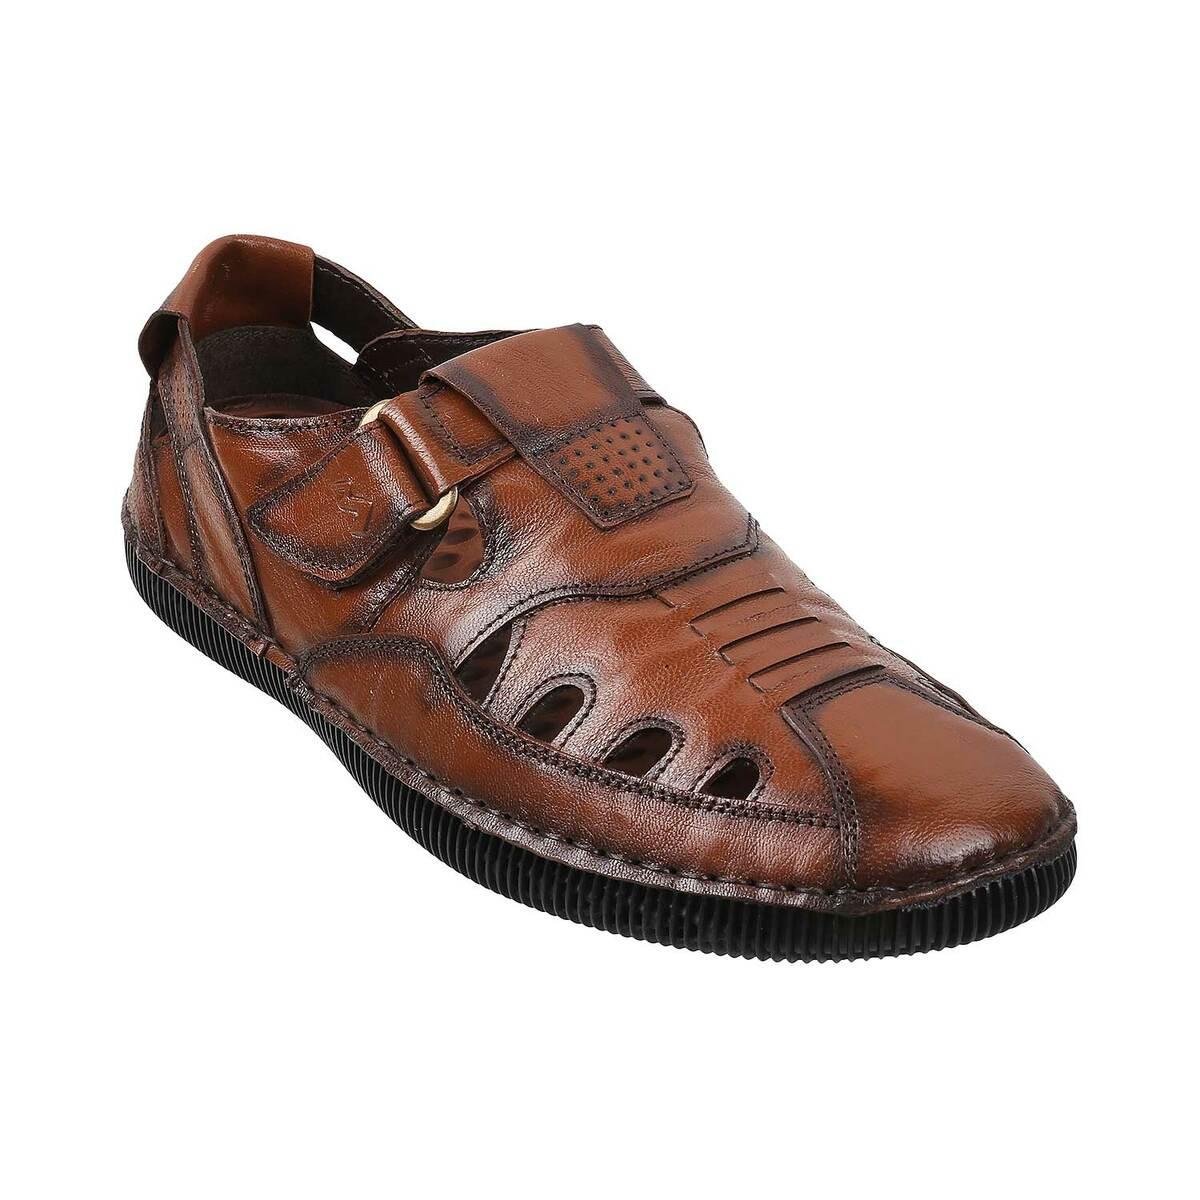 Buy Metro Men Tan Casual Sandals Online | SKU: 18-1600-23-40 - Metro Shoes